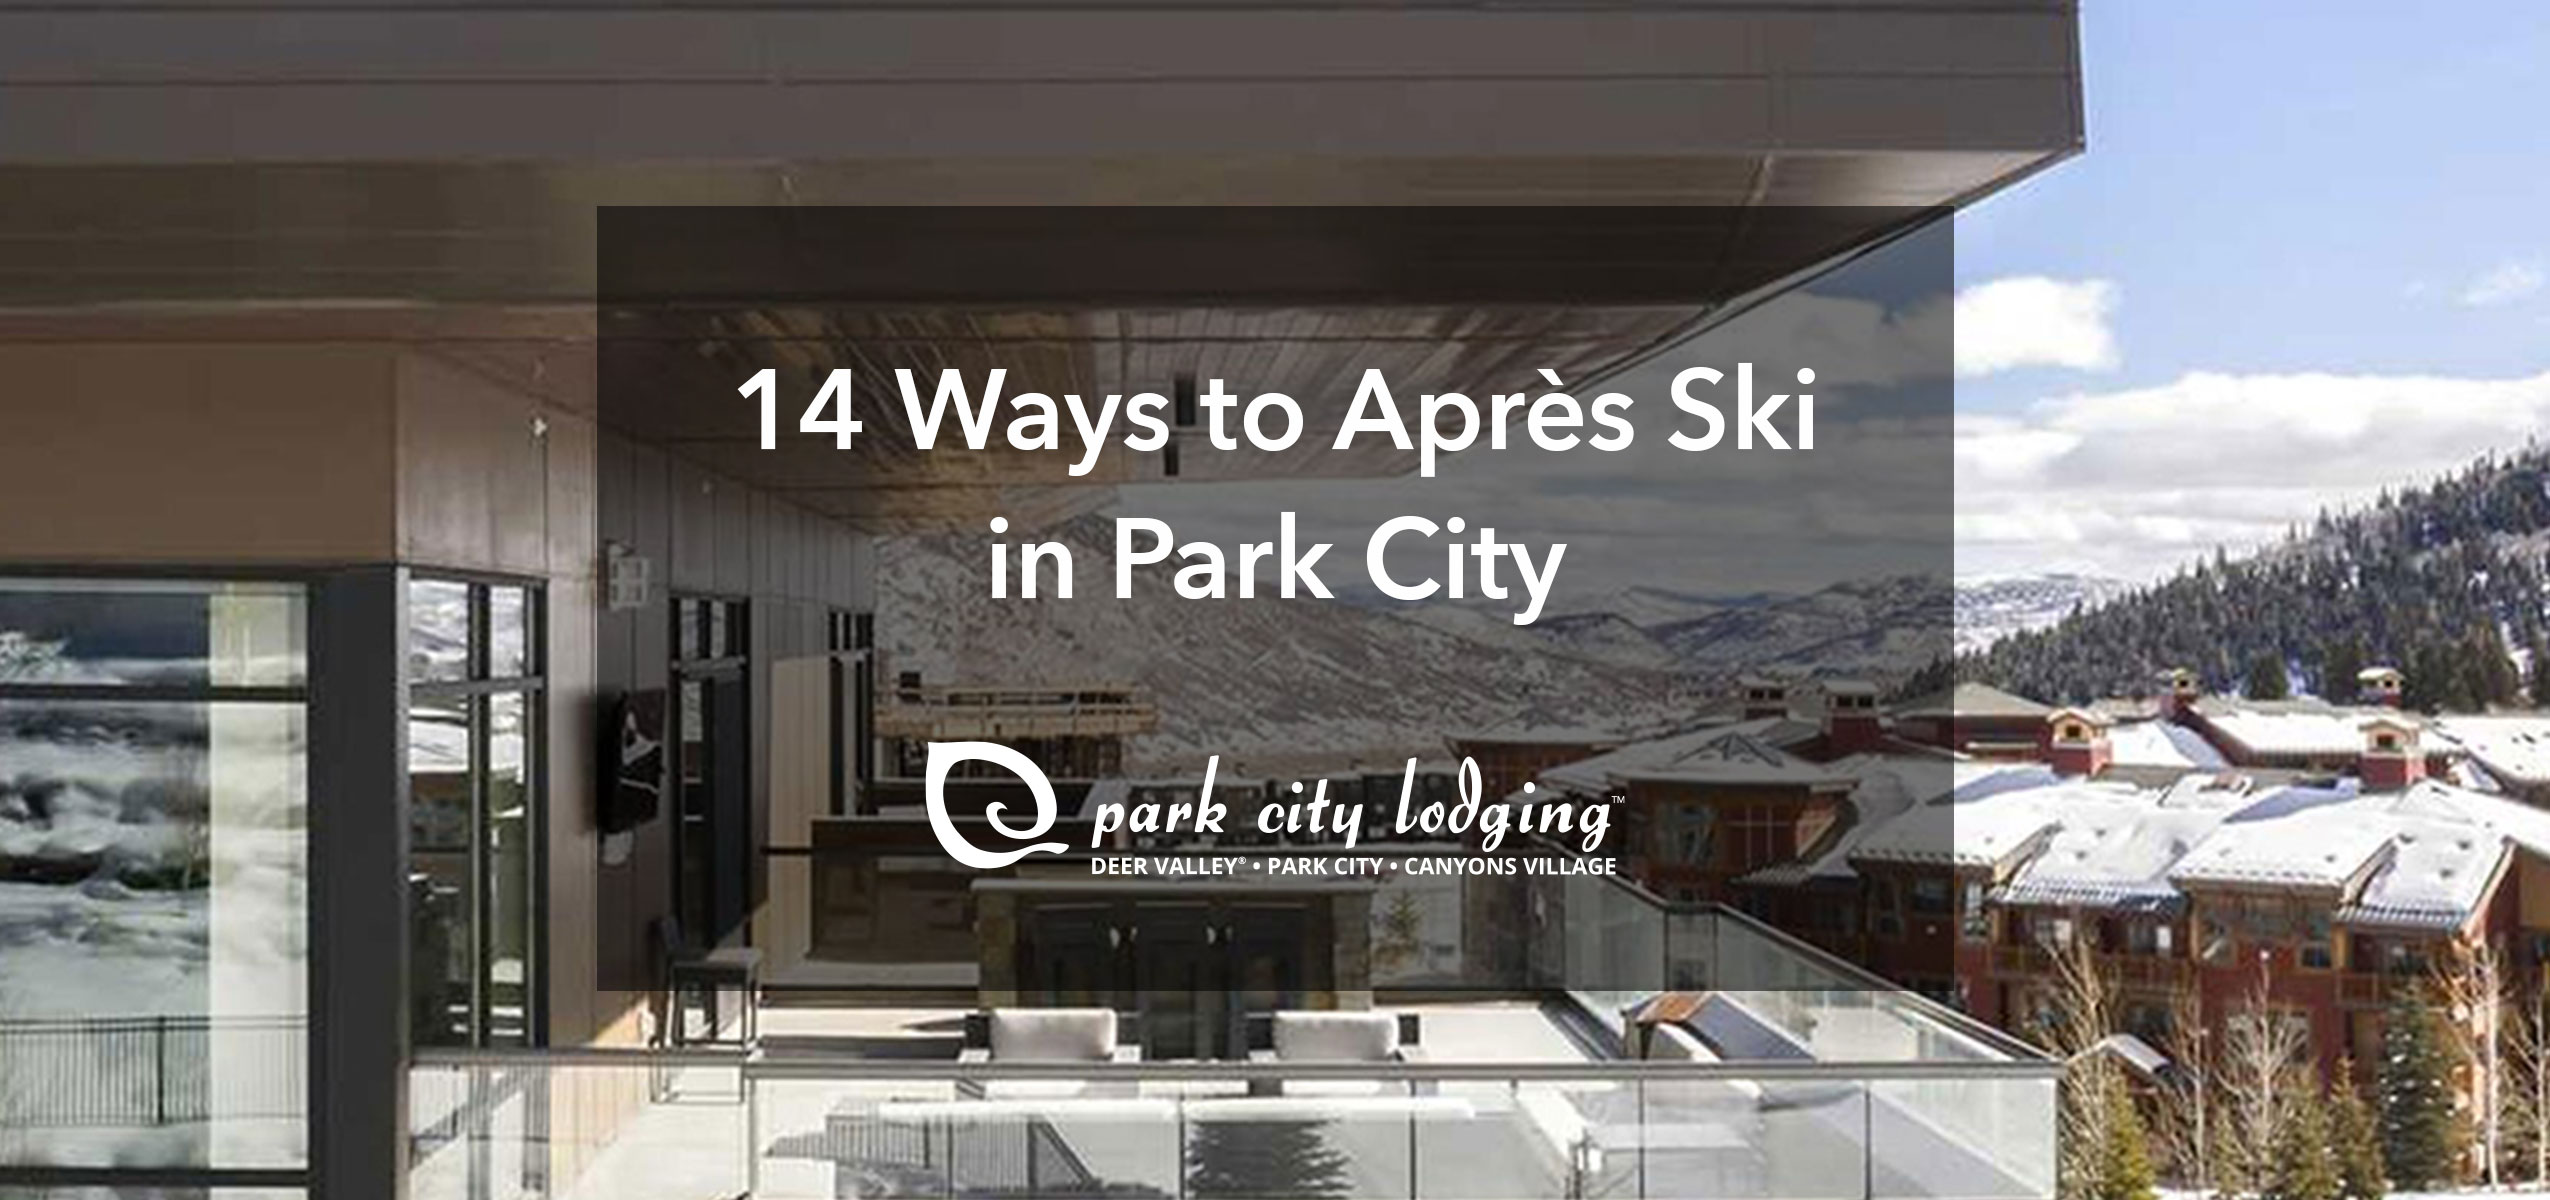 14 ways to apres ski in park city image